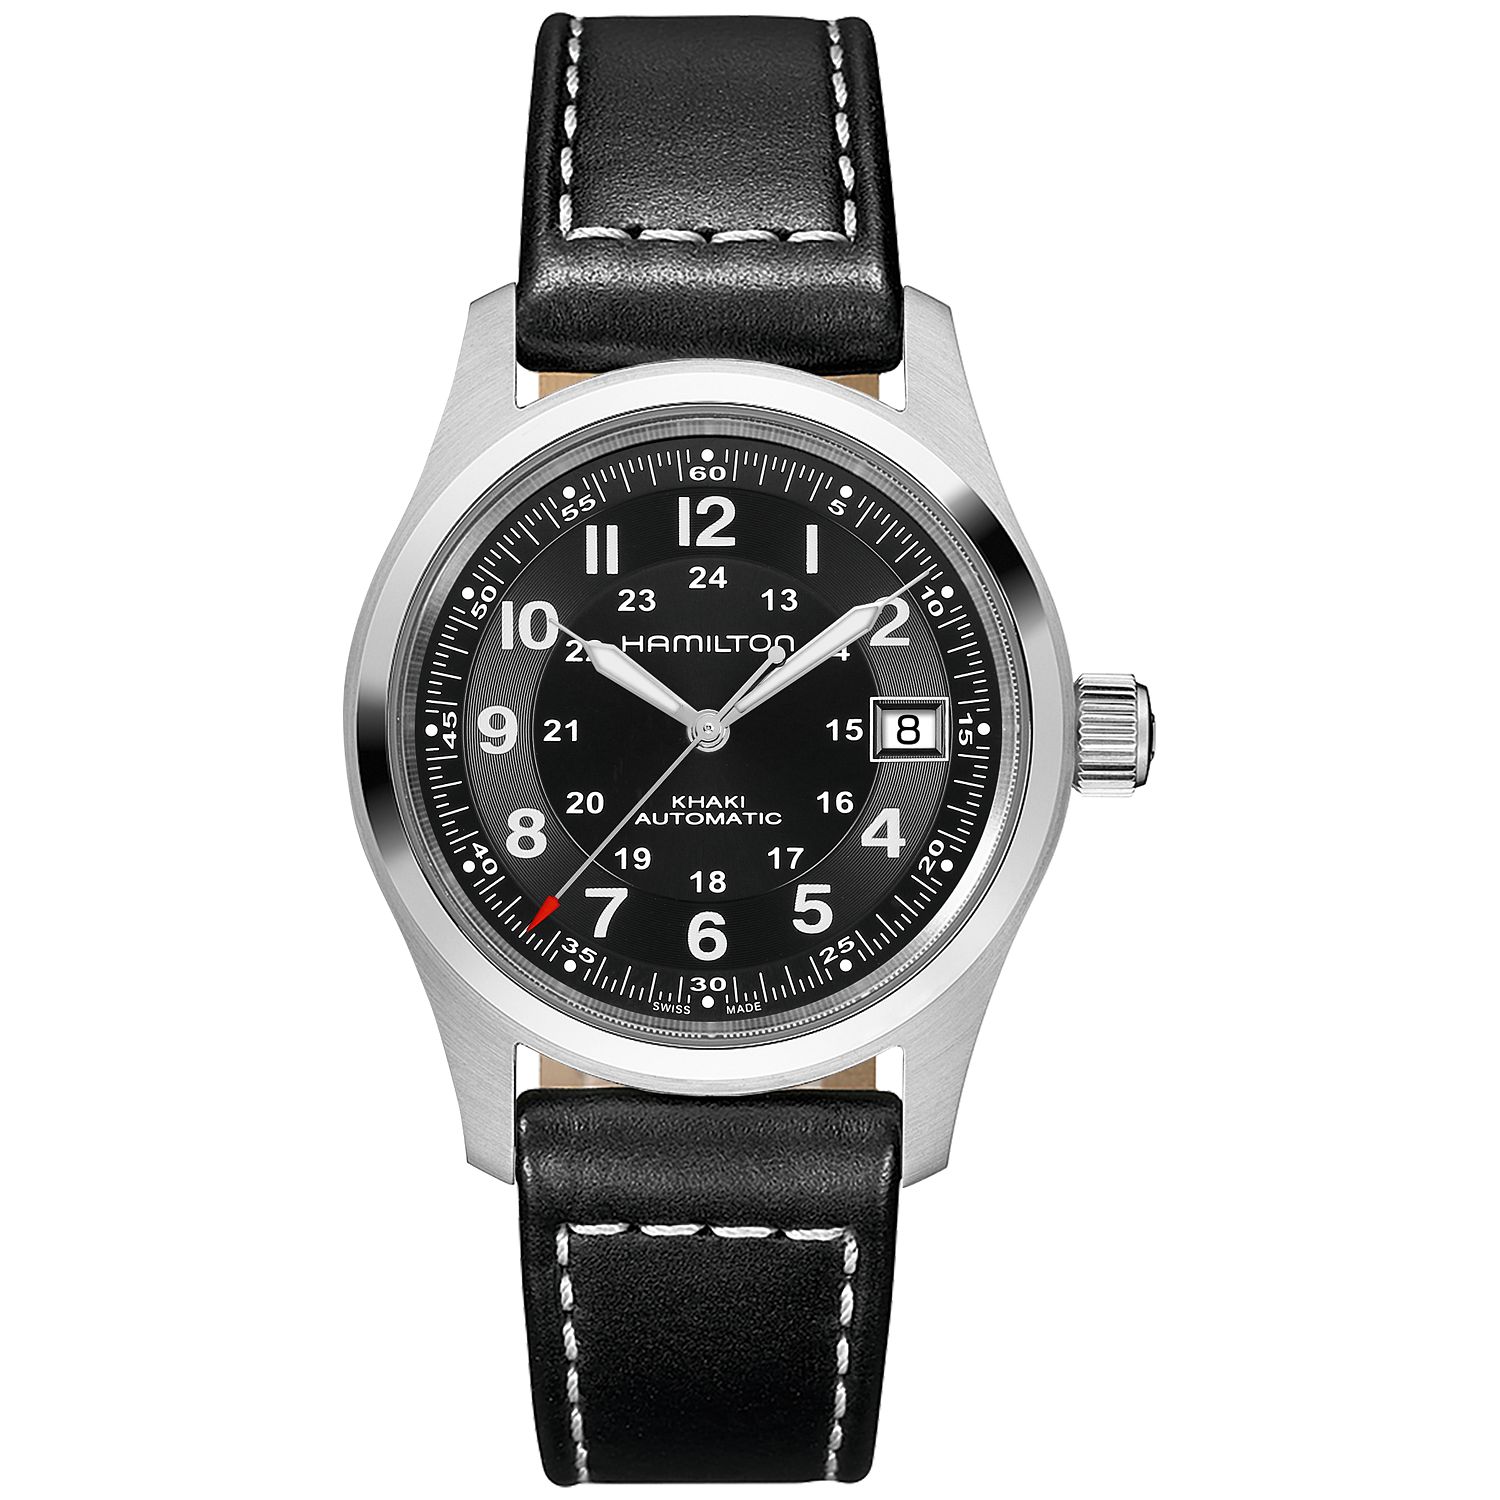 Hamilton Men's Swiss Automatic Khaki Field Black Leather Strap Watch 38mm $431.25